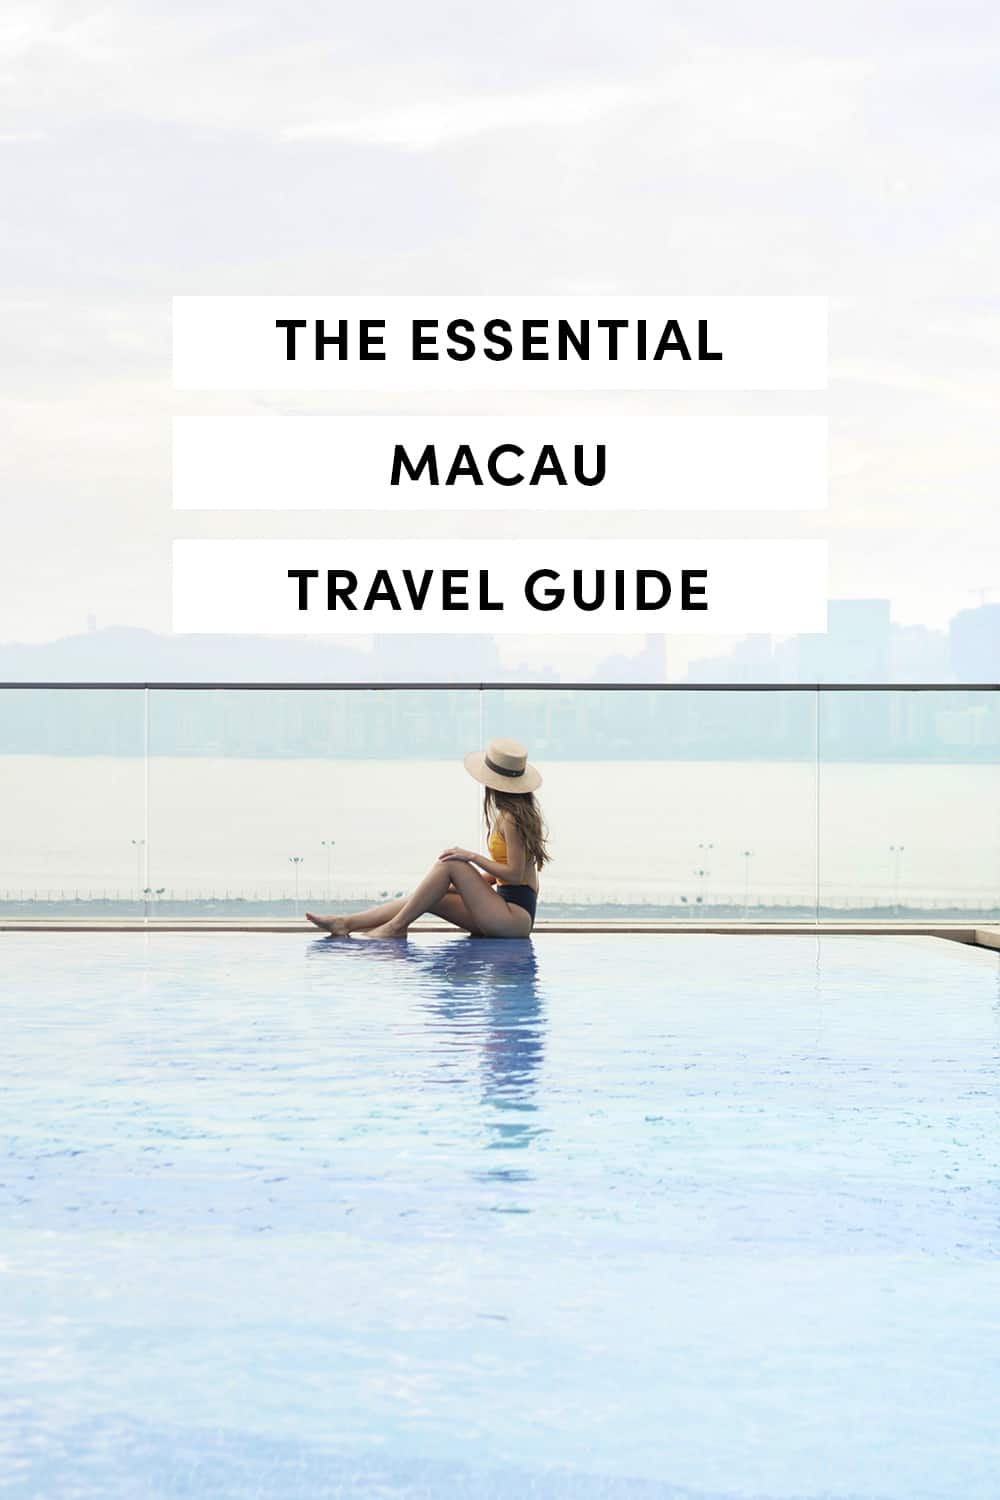 The Essential Macau Travel Guide